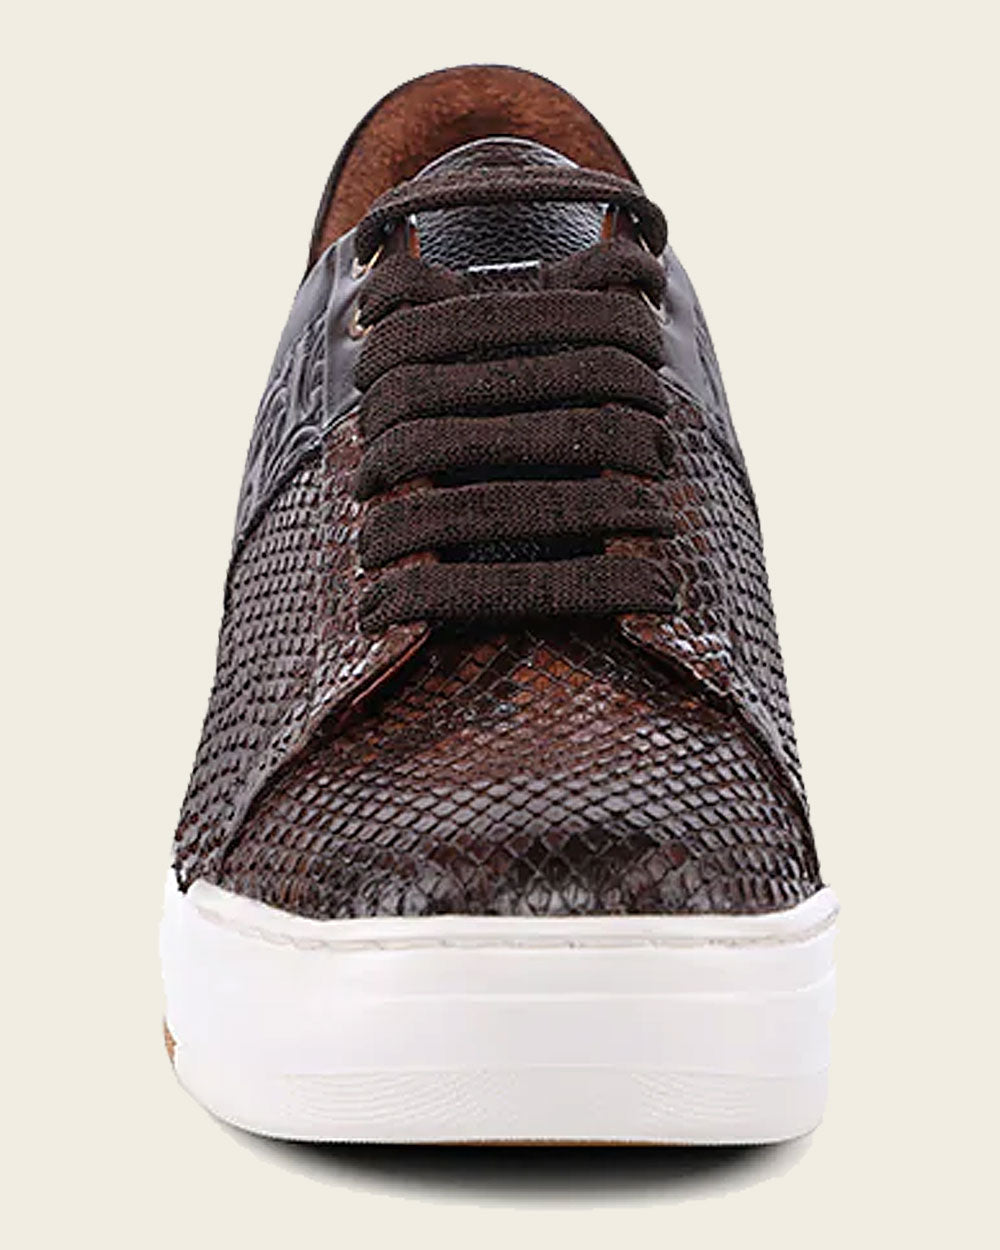 Genuine python dark brown leather sneakers